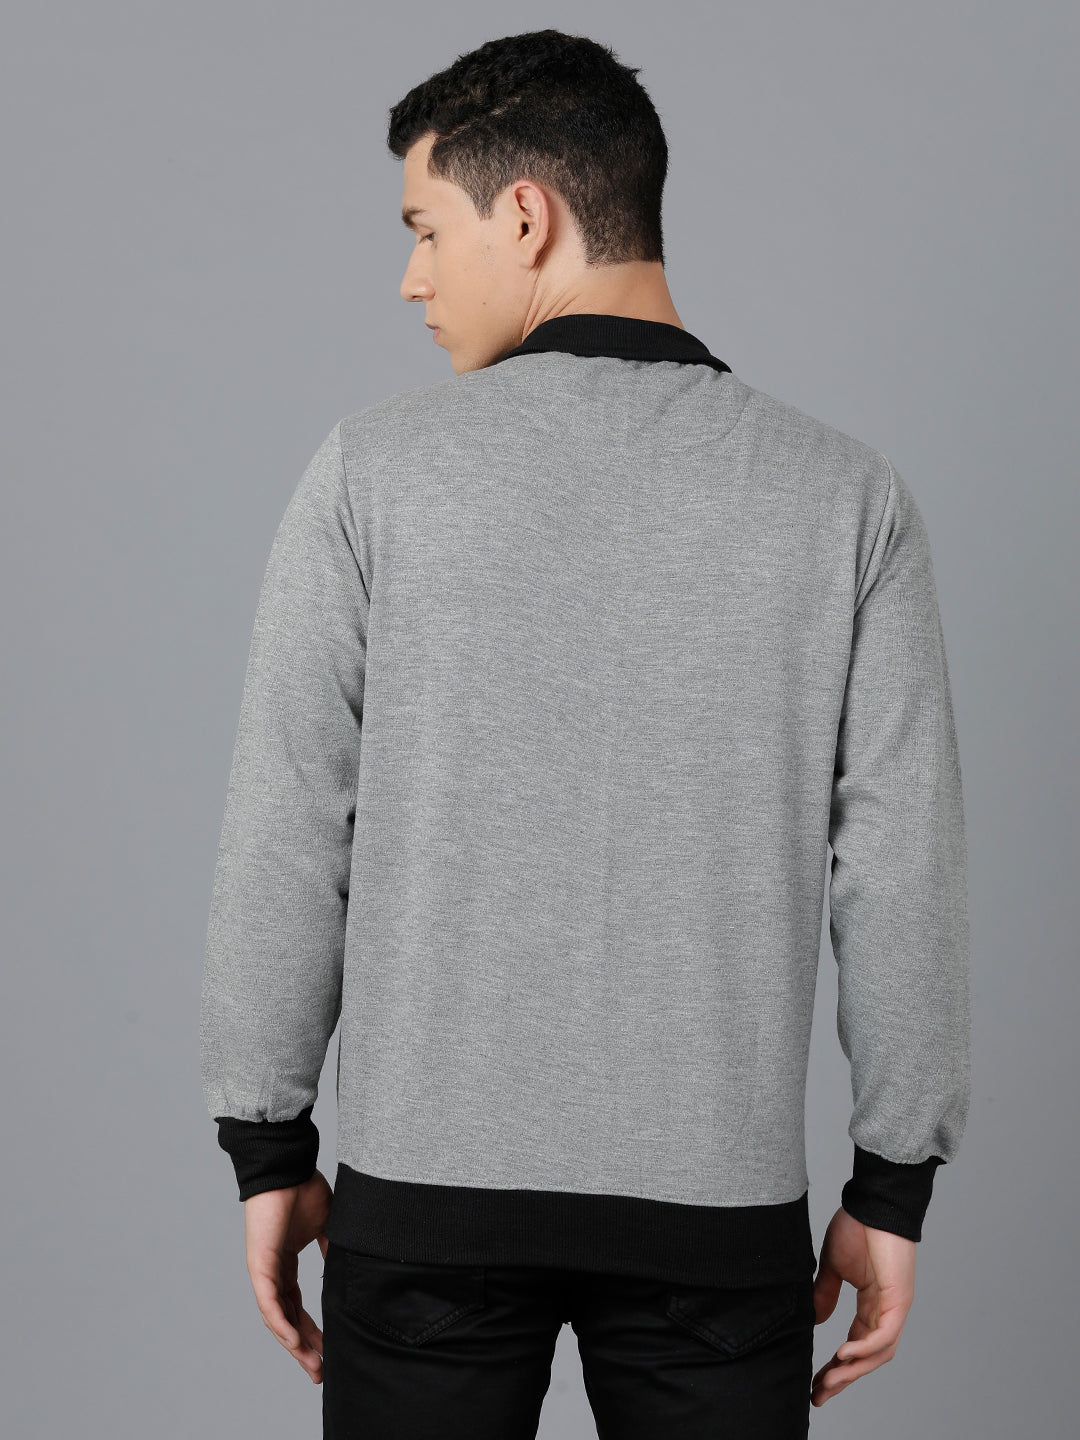 Cotton mens grey sweatshirt